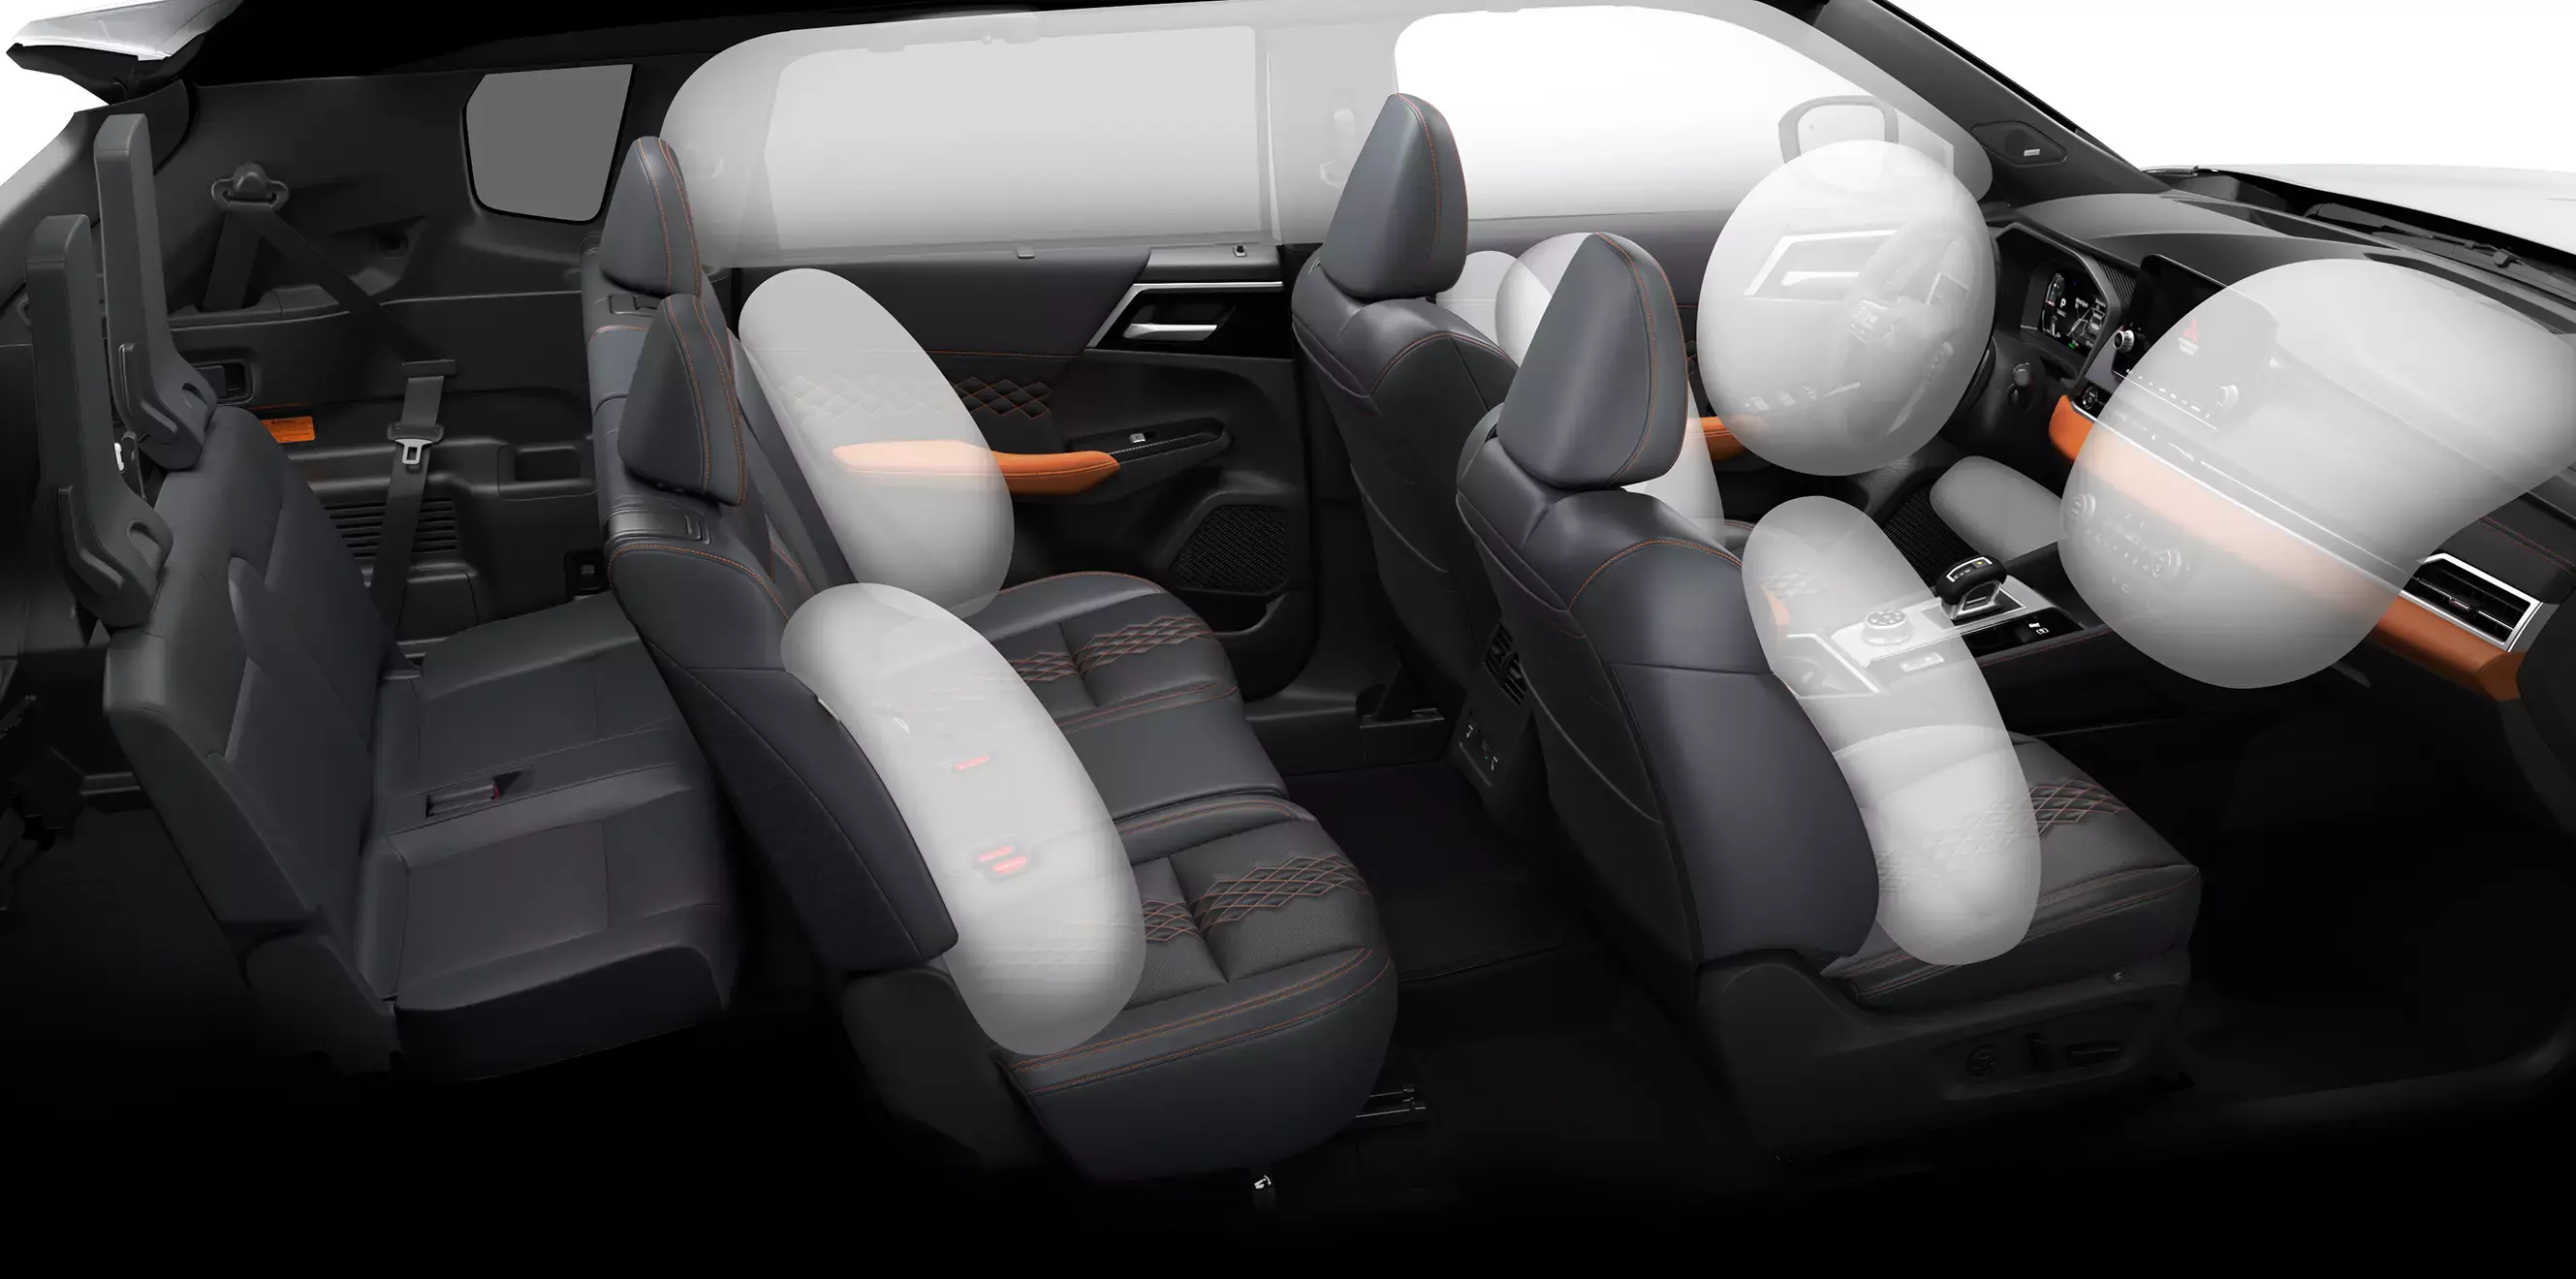 Mitsubishi Outlander interior - Seats